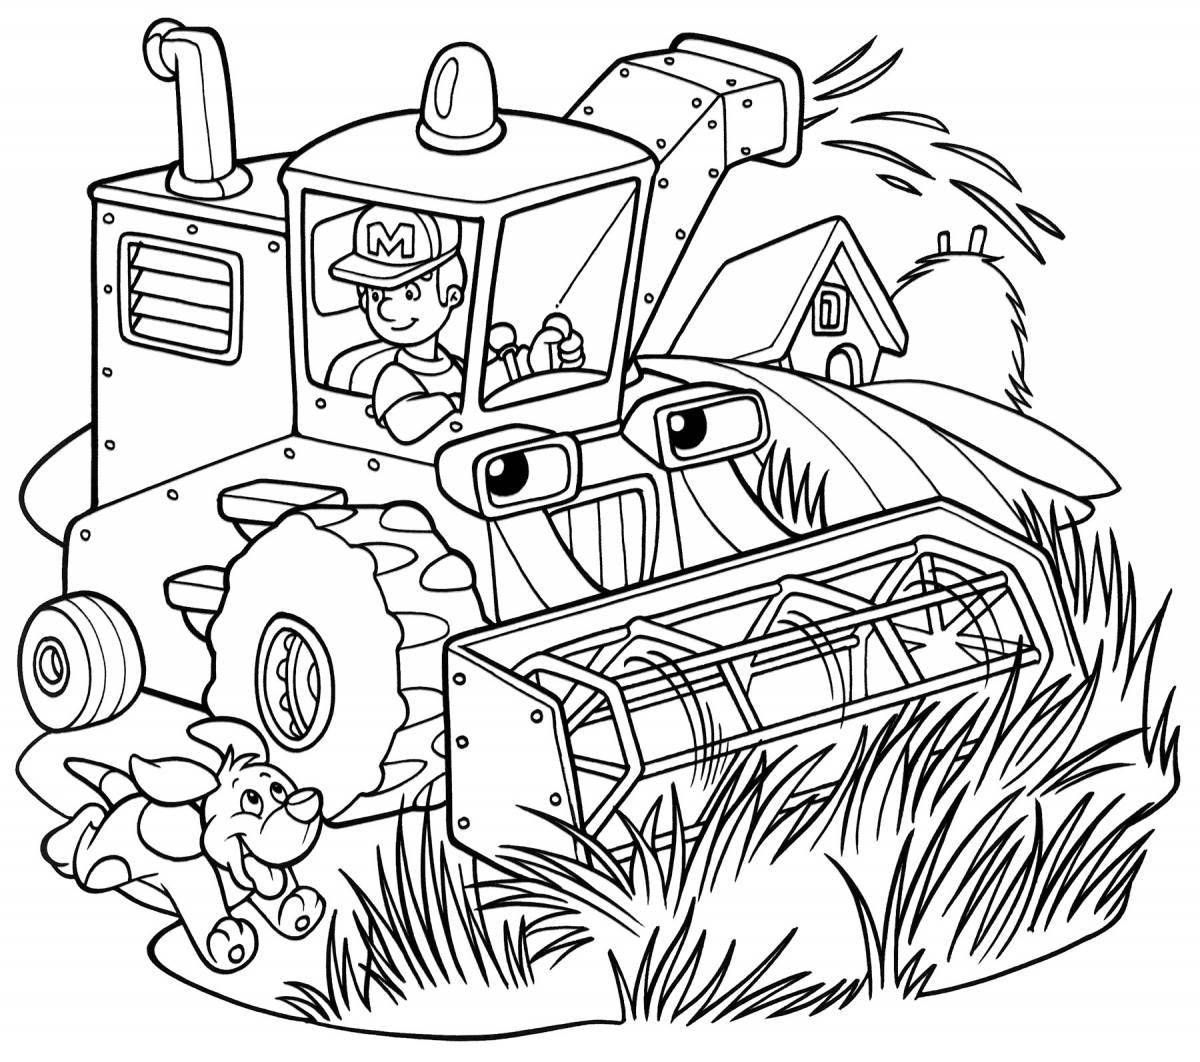 Pre-k playful harvester coloring page